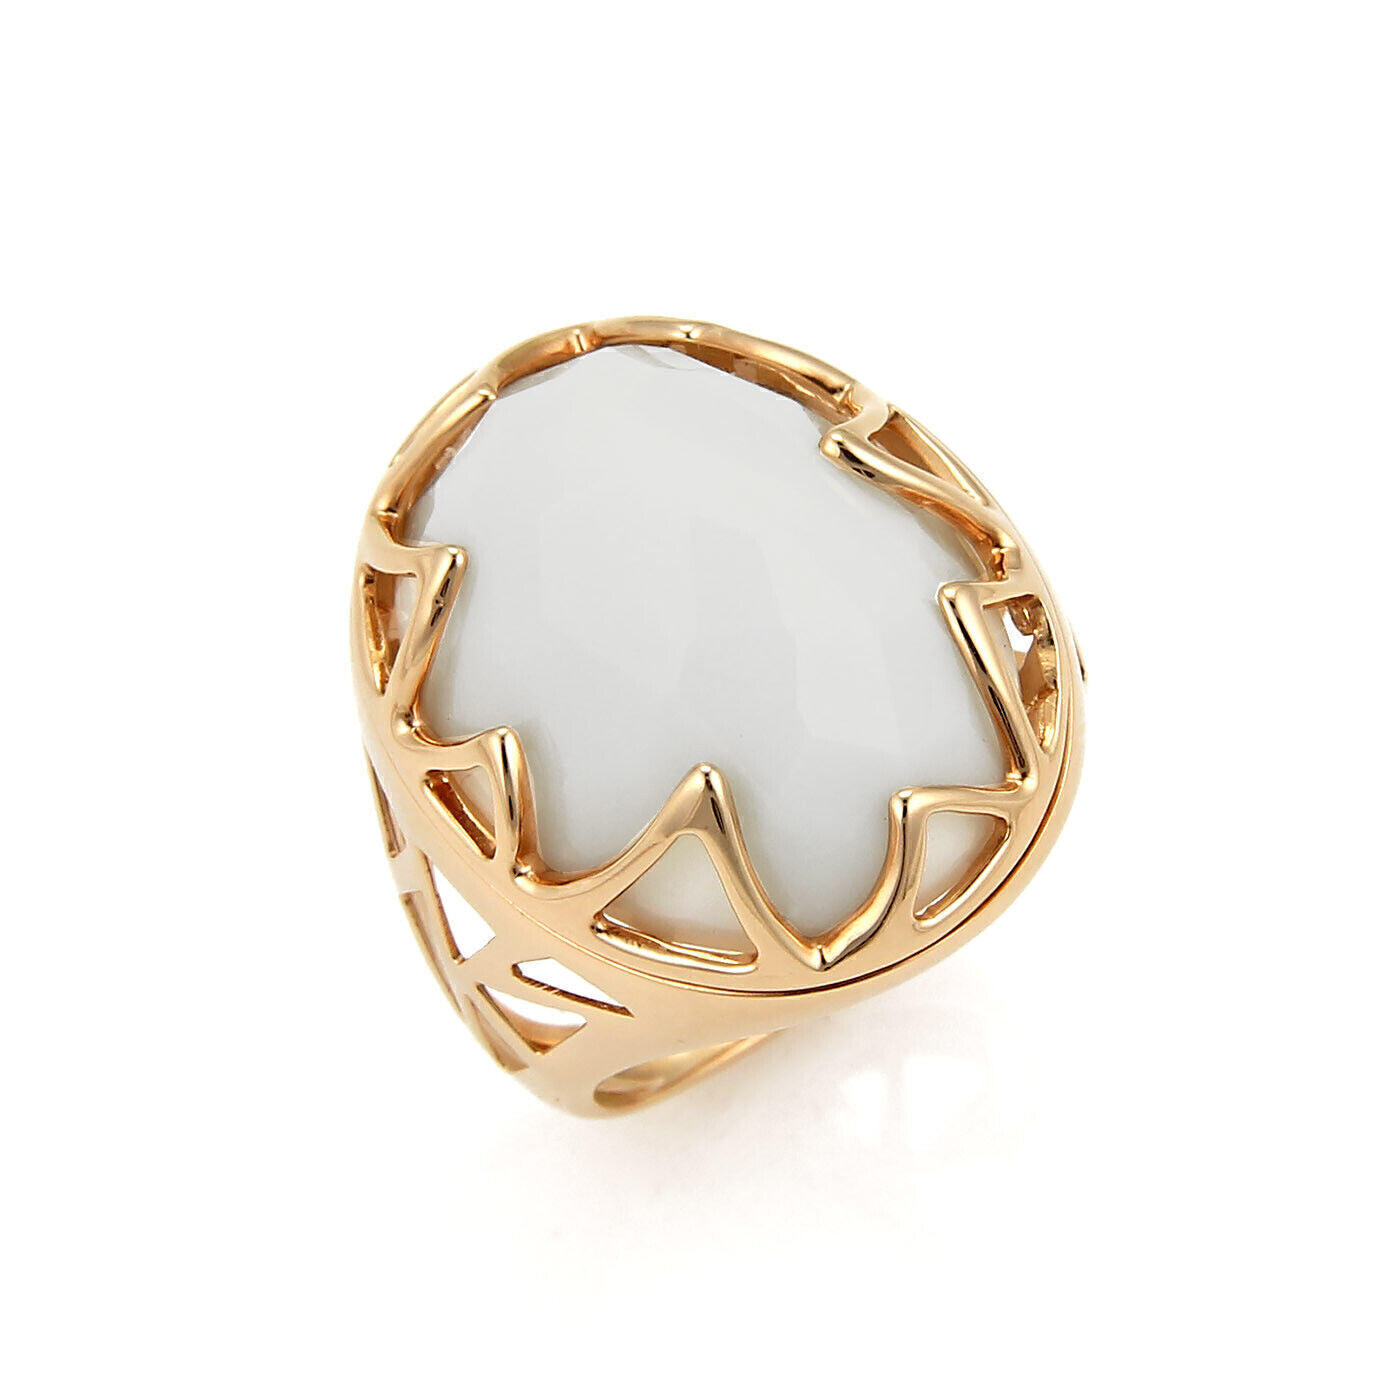 Lalla & Rossana White Agate 18k Rose Gold Dome Ring | Rings | catalog, Designer Jewelry, Lalla & Rossana, Rings | Lalla & Rossana